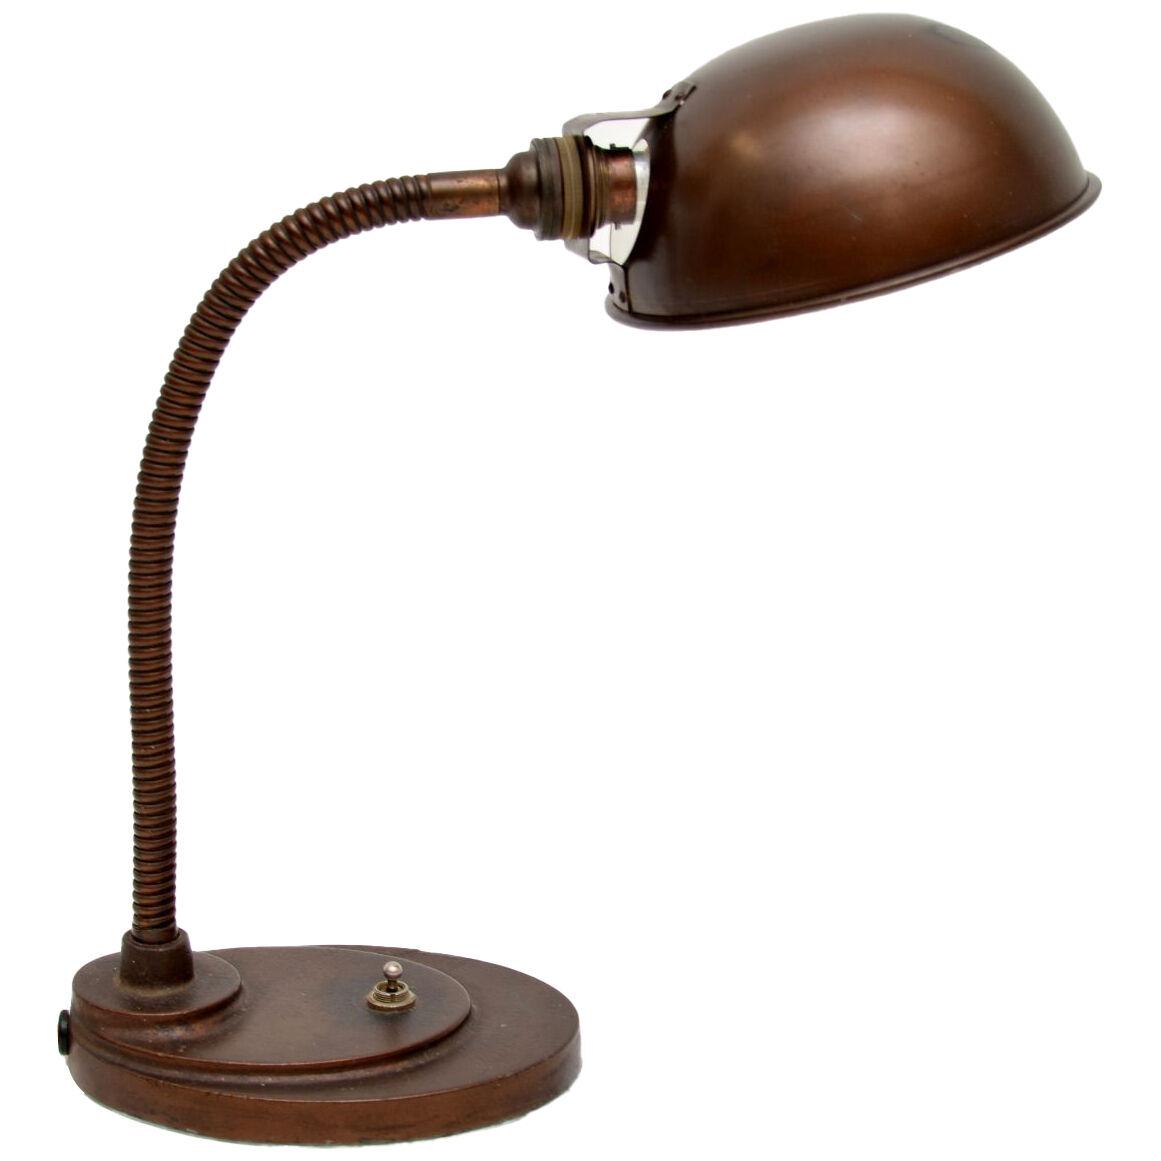 Art Deco Period Copper Desk Lamp